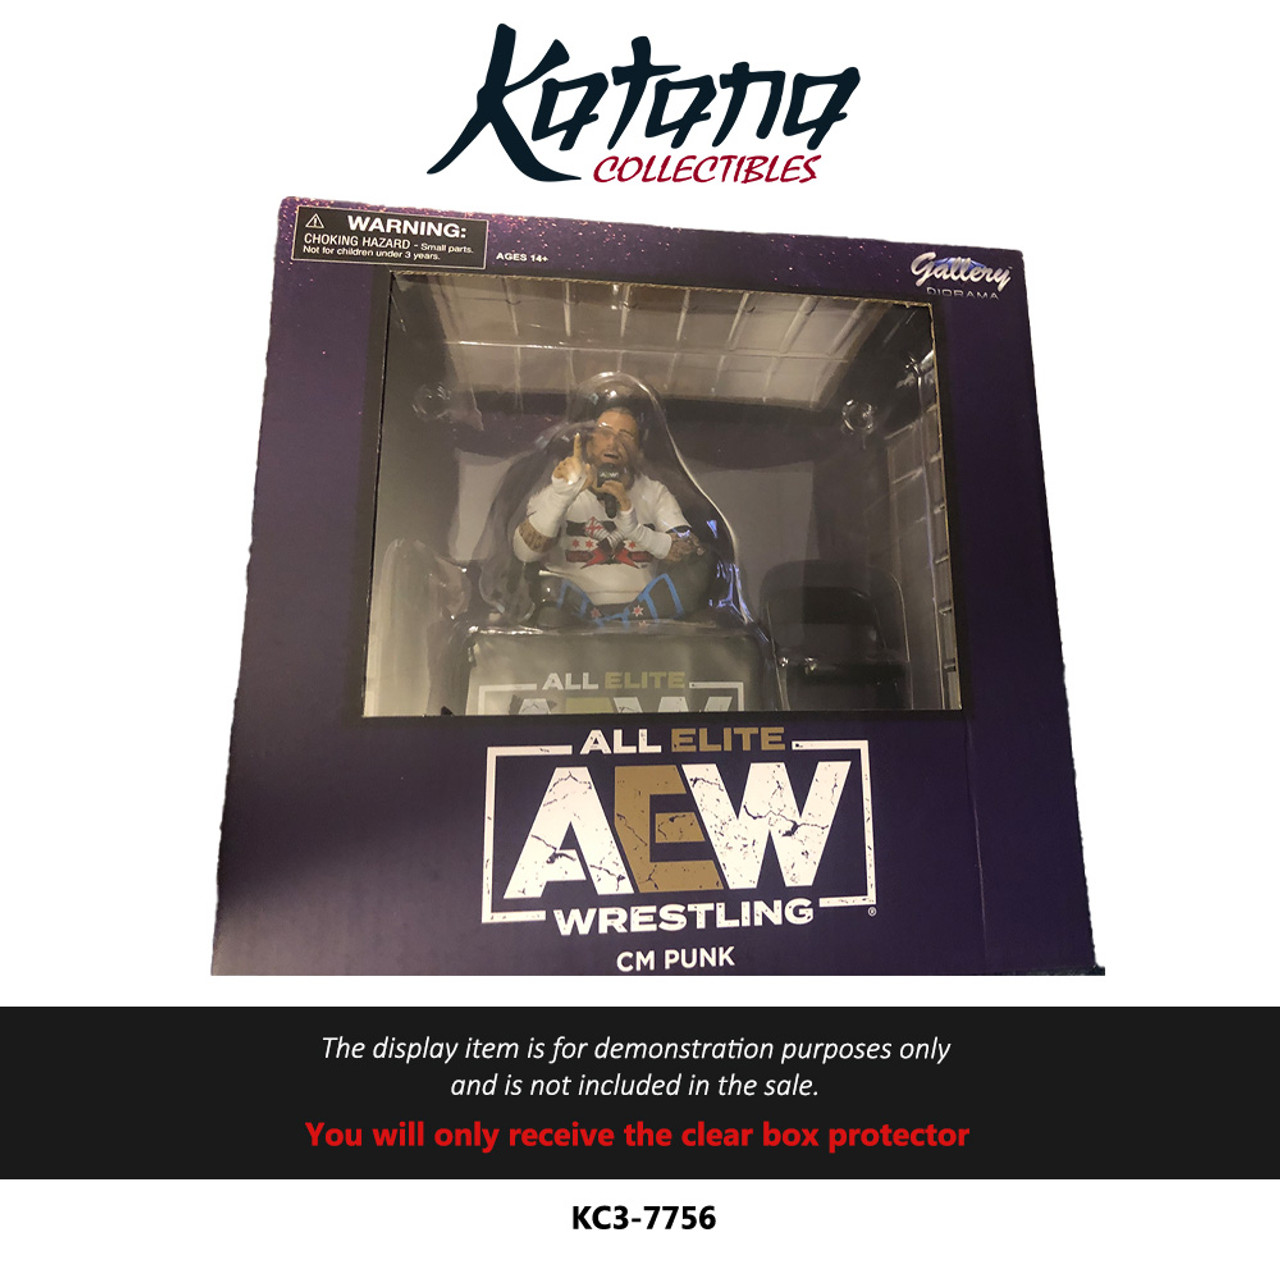 Katana Collectibles Protector For AEW CM Punk by Diamond Select